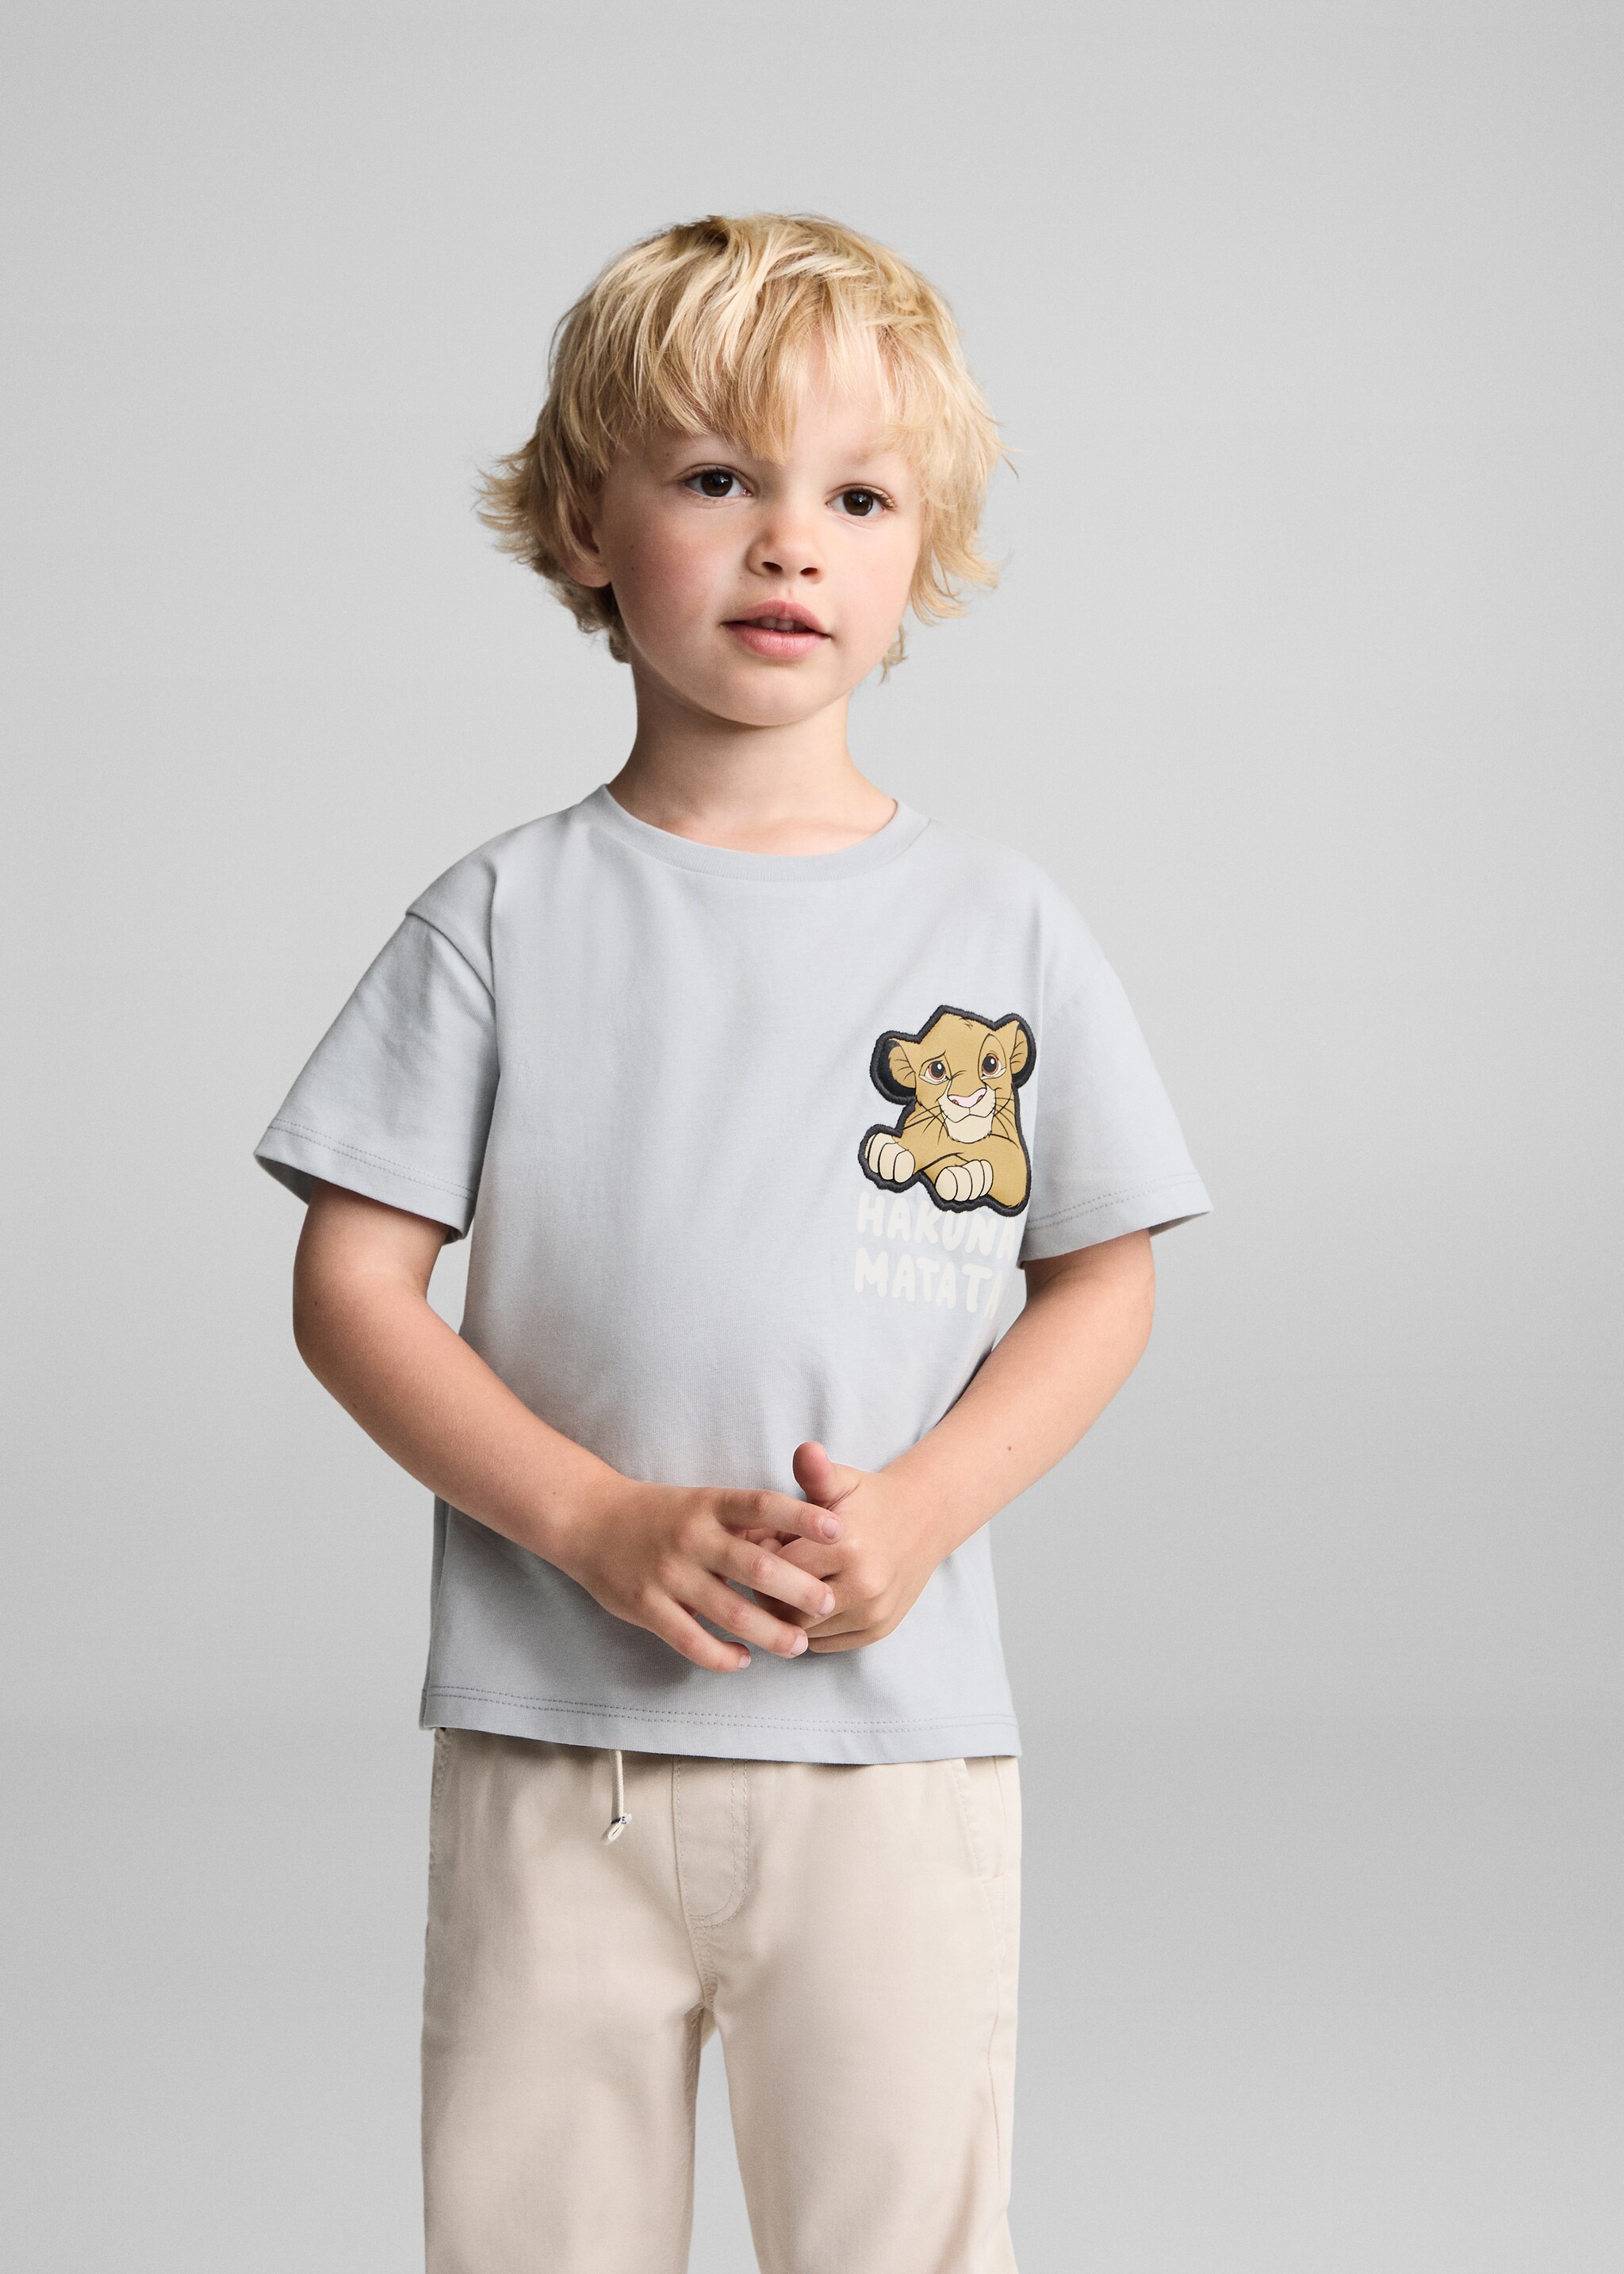 The Lion King t-shirt - Середній план